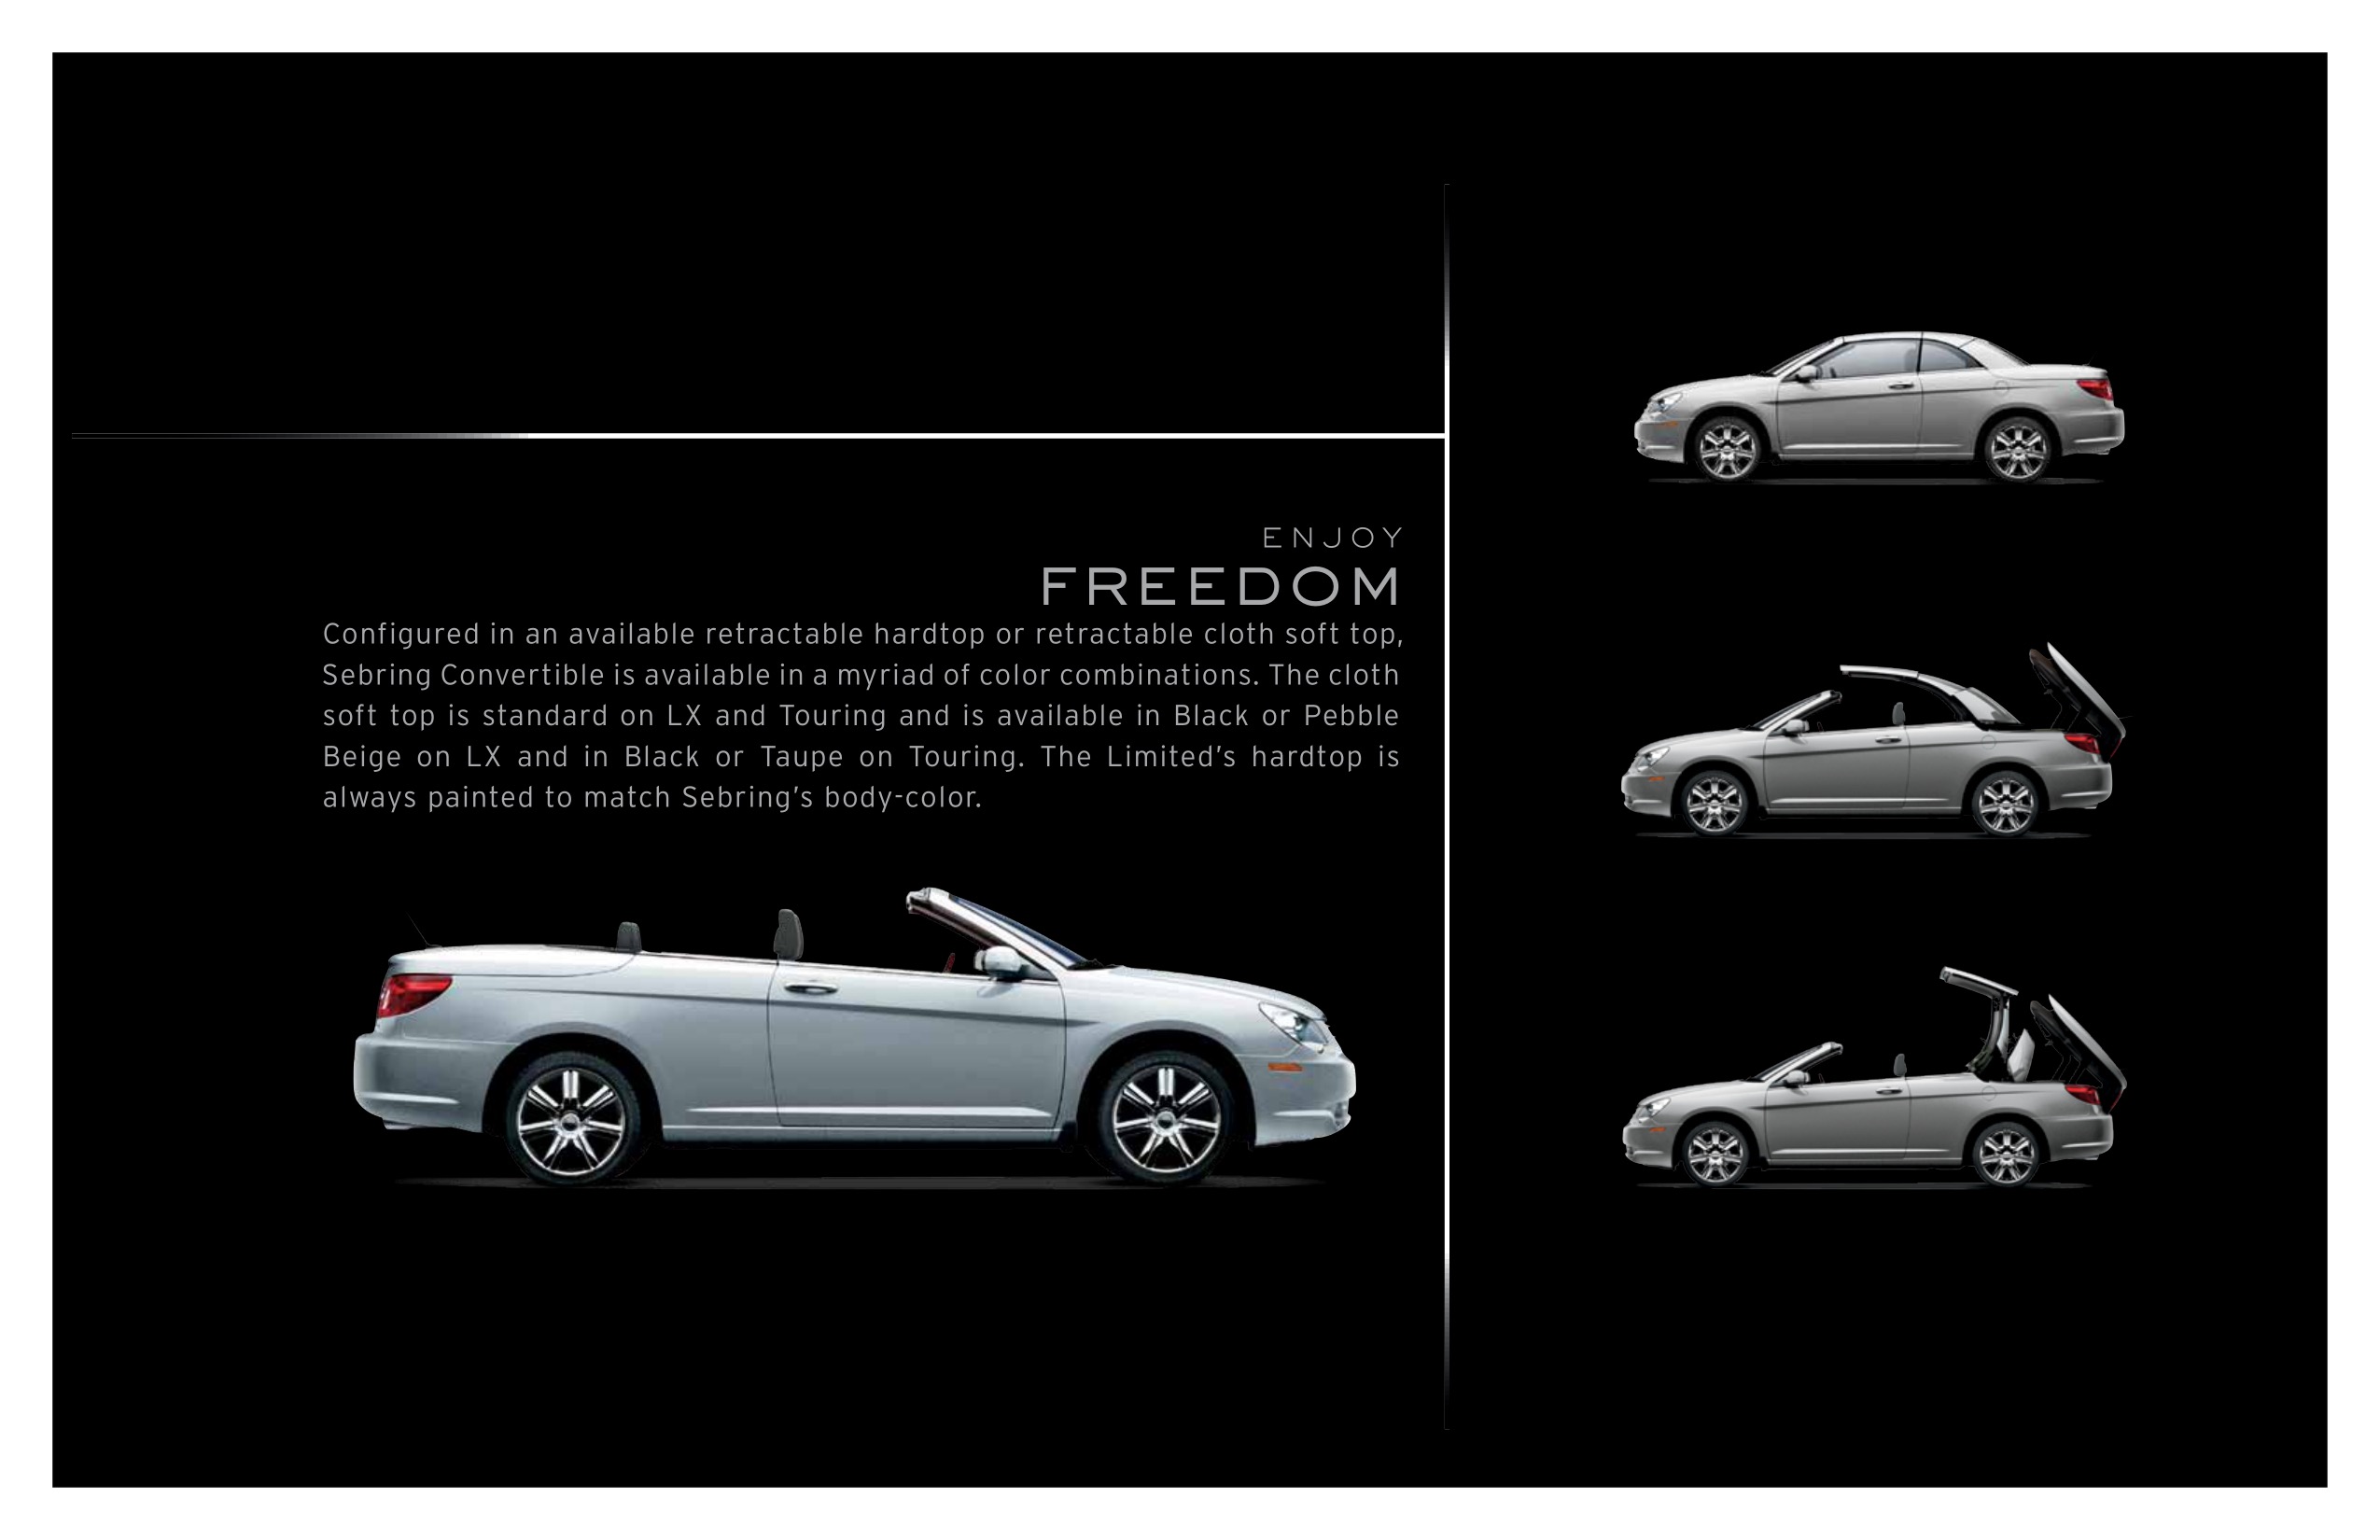 2010 Chrysler Sebring Convertible Brochure Page 1